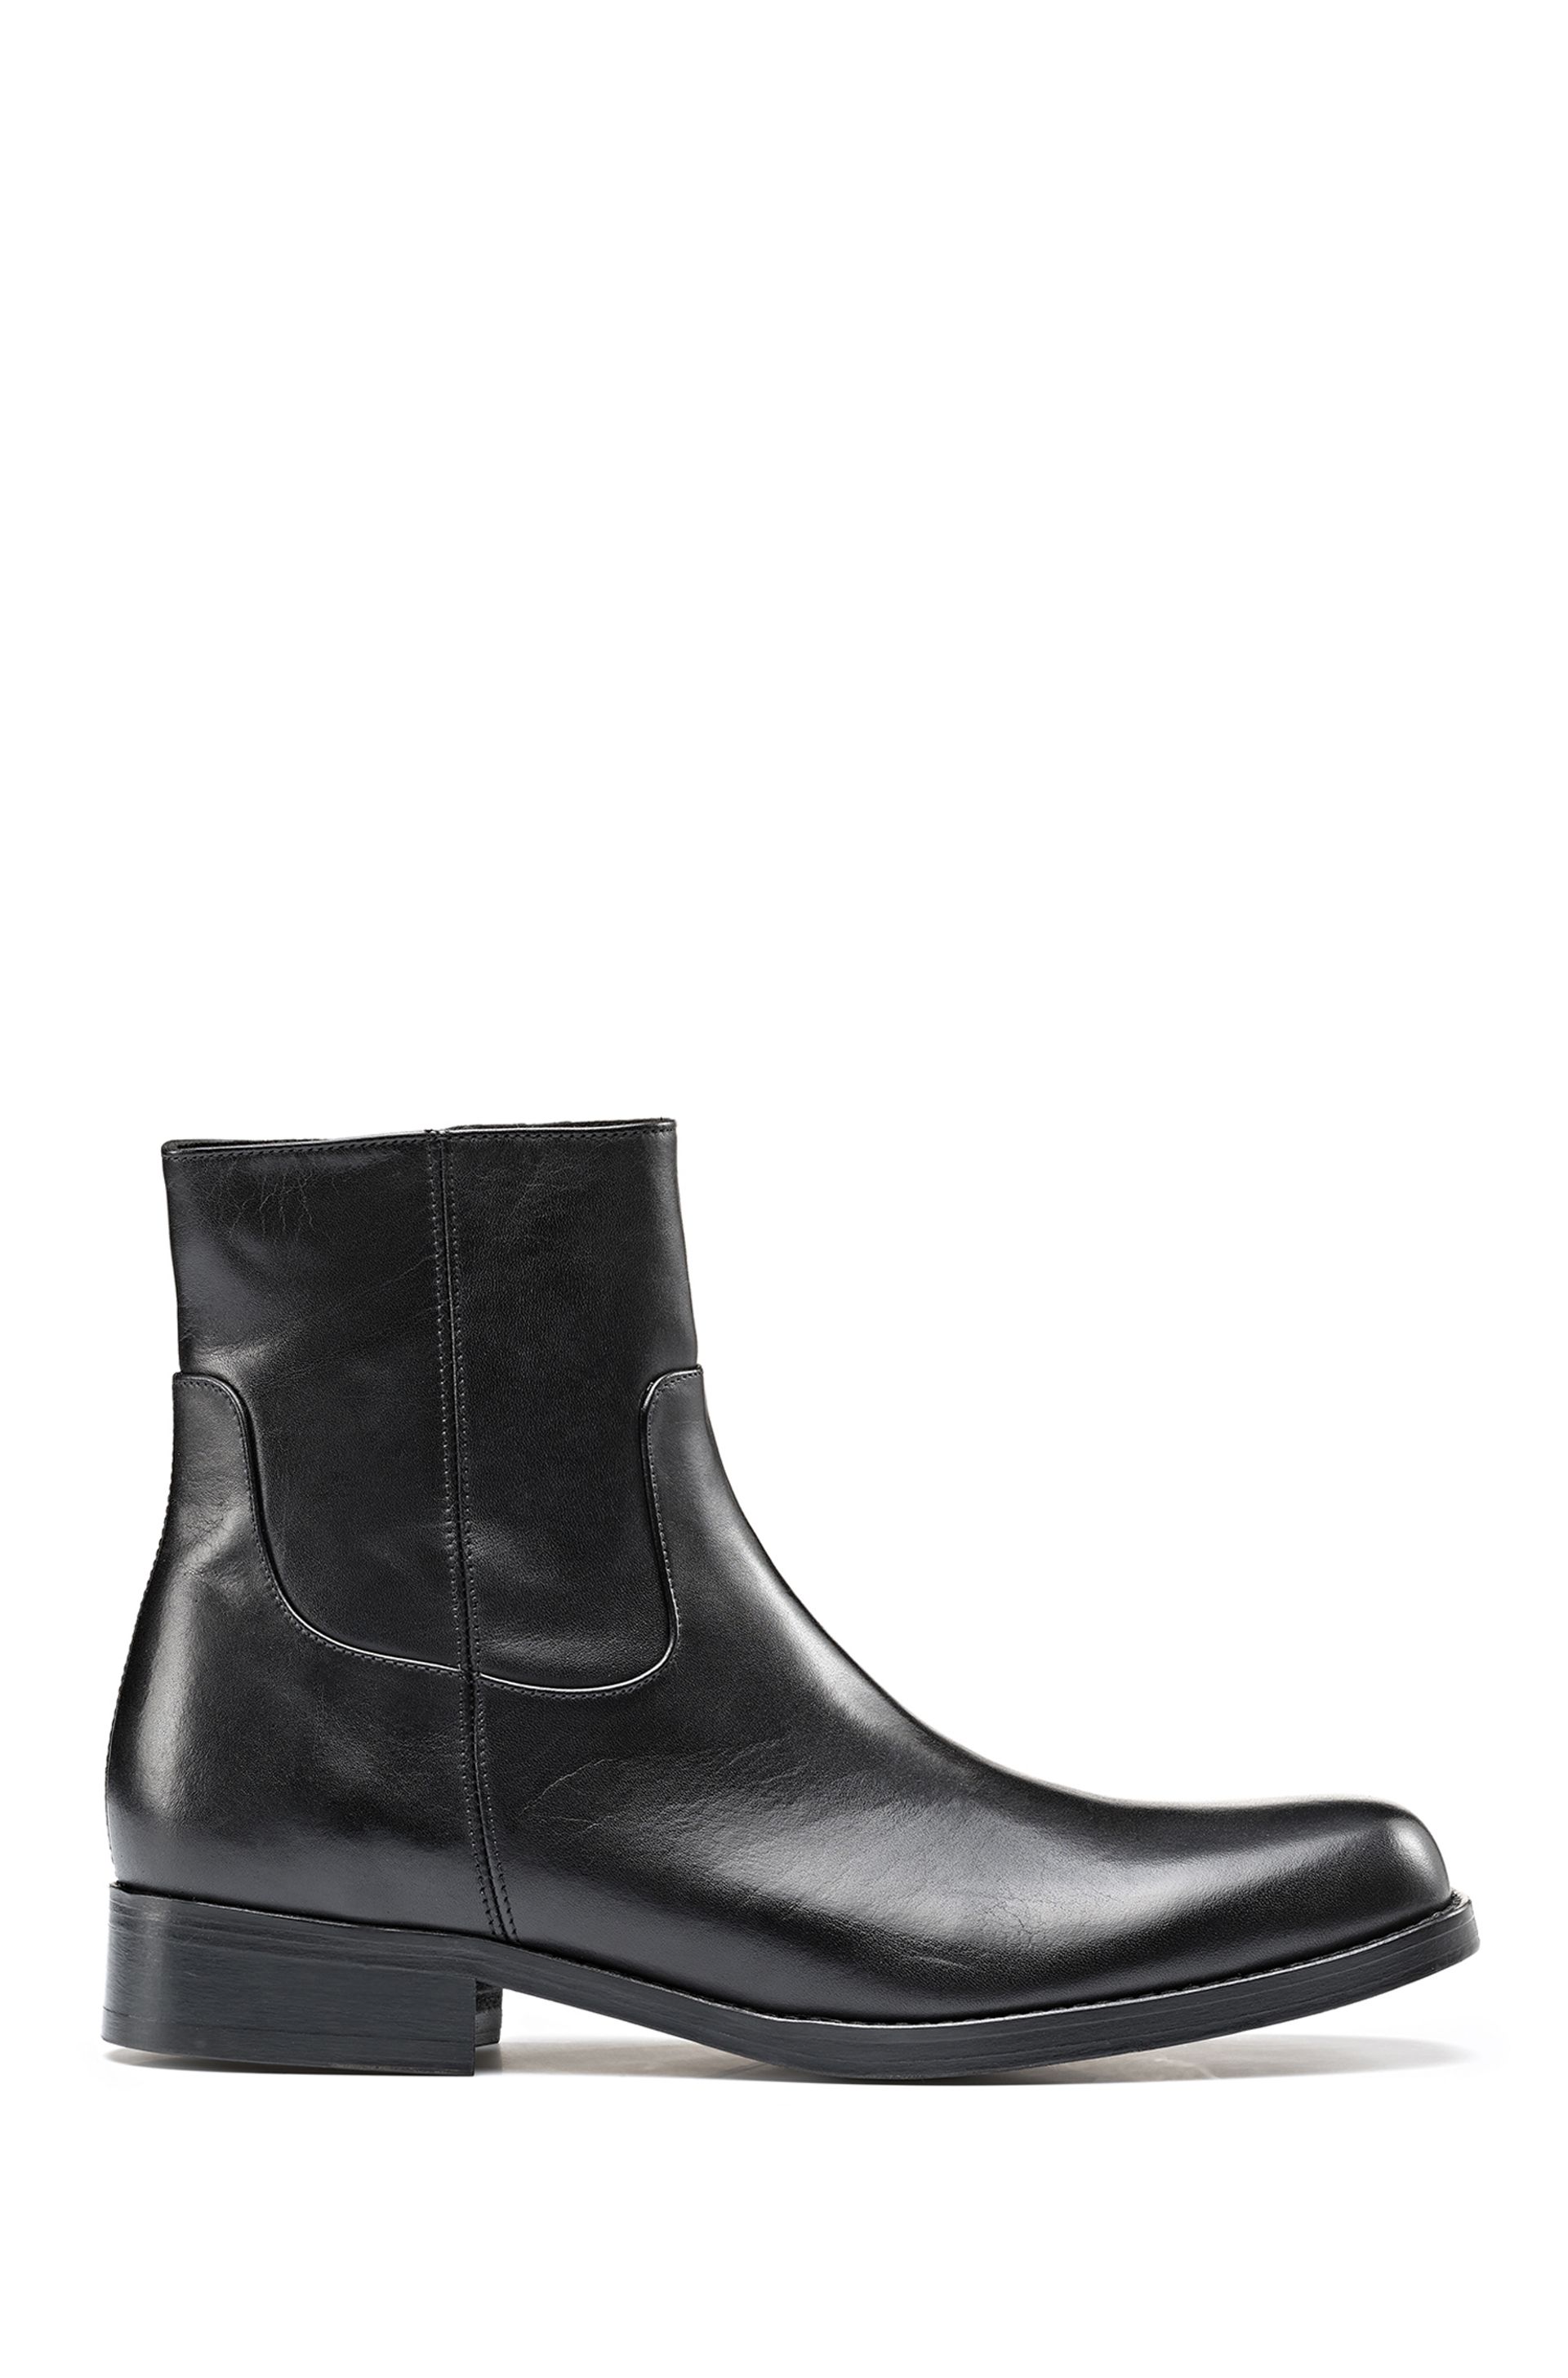 Hugo Boss Botas con cremallera negro elegante Zapatos Botines Botas con cremallera 